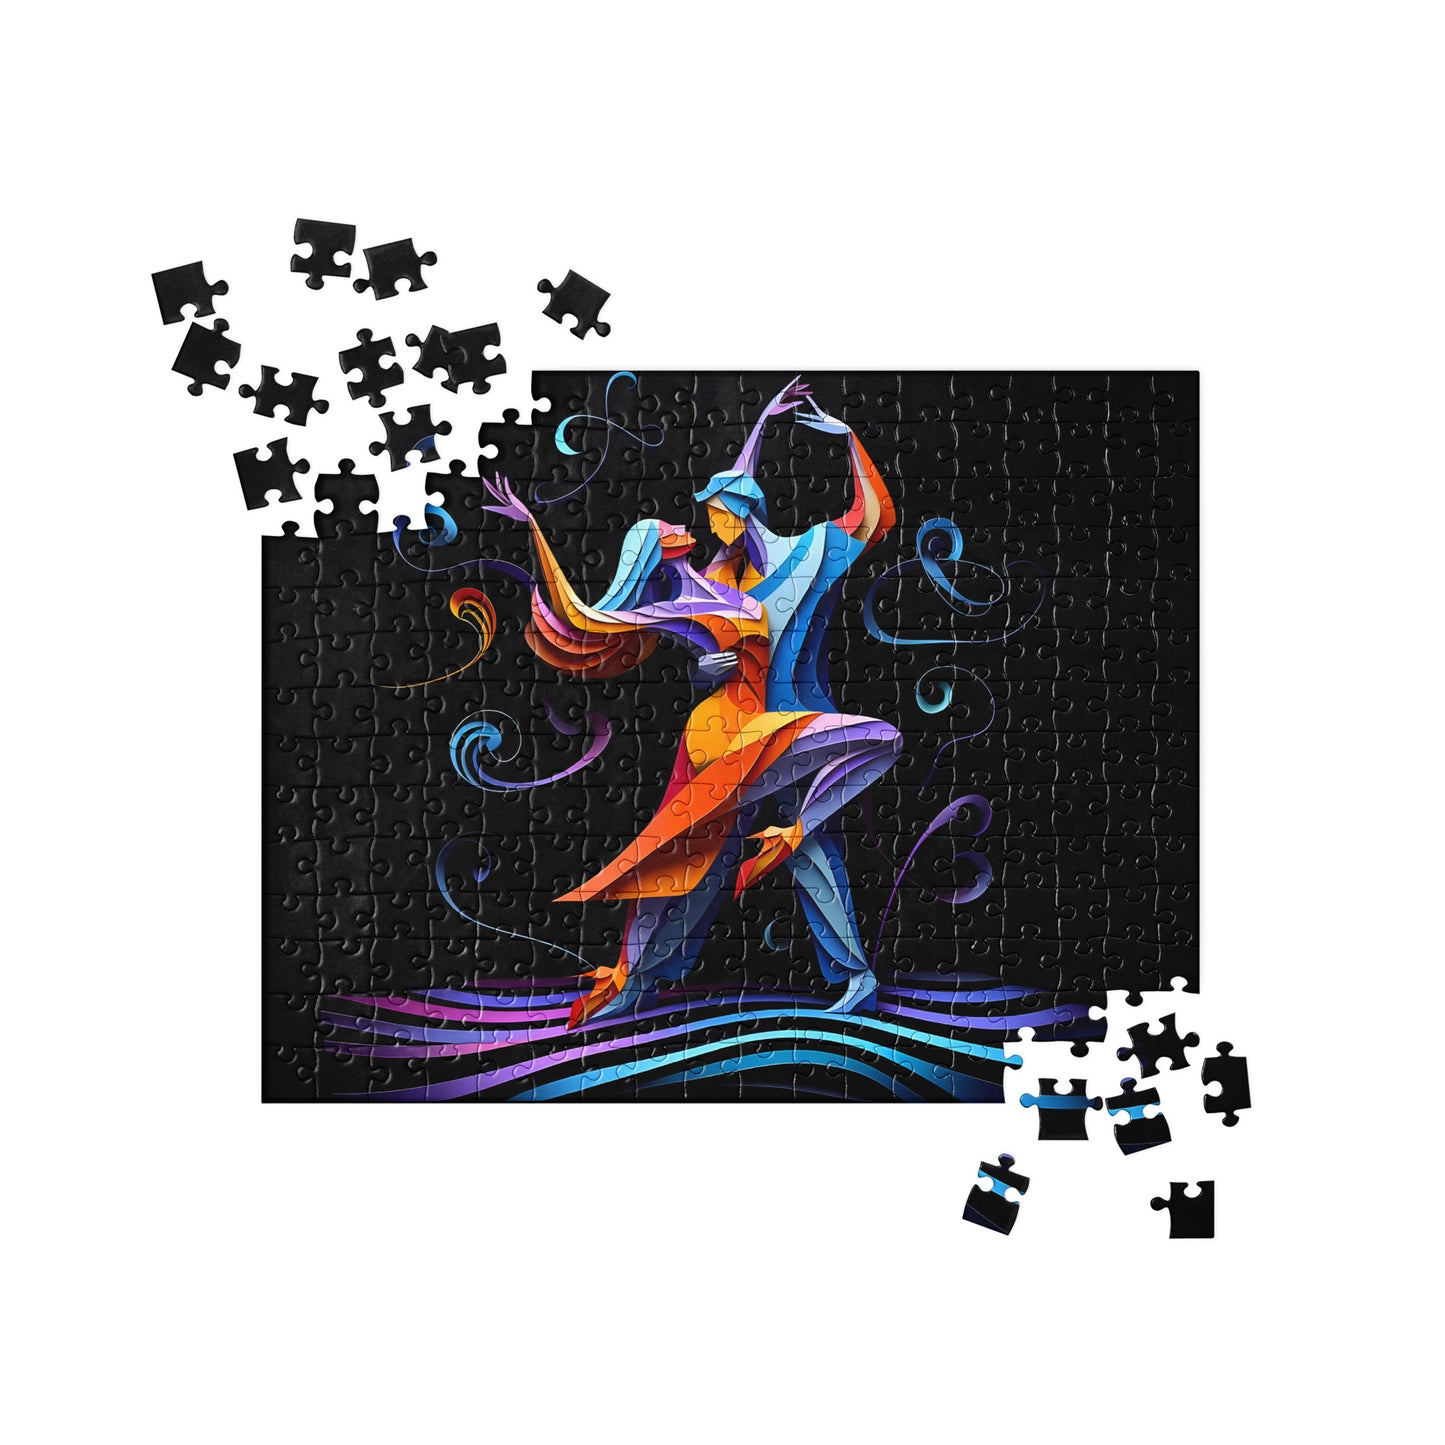 3D Dancing Couple - Jigsaw Puzzle #2